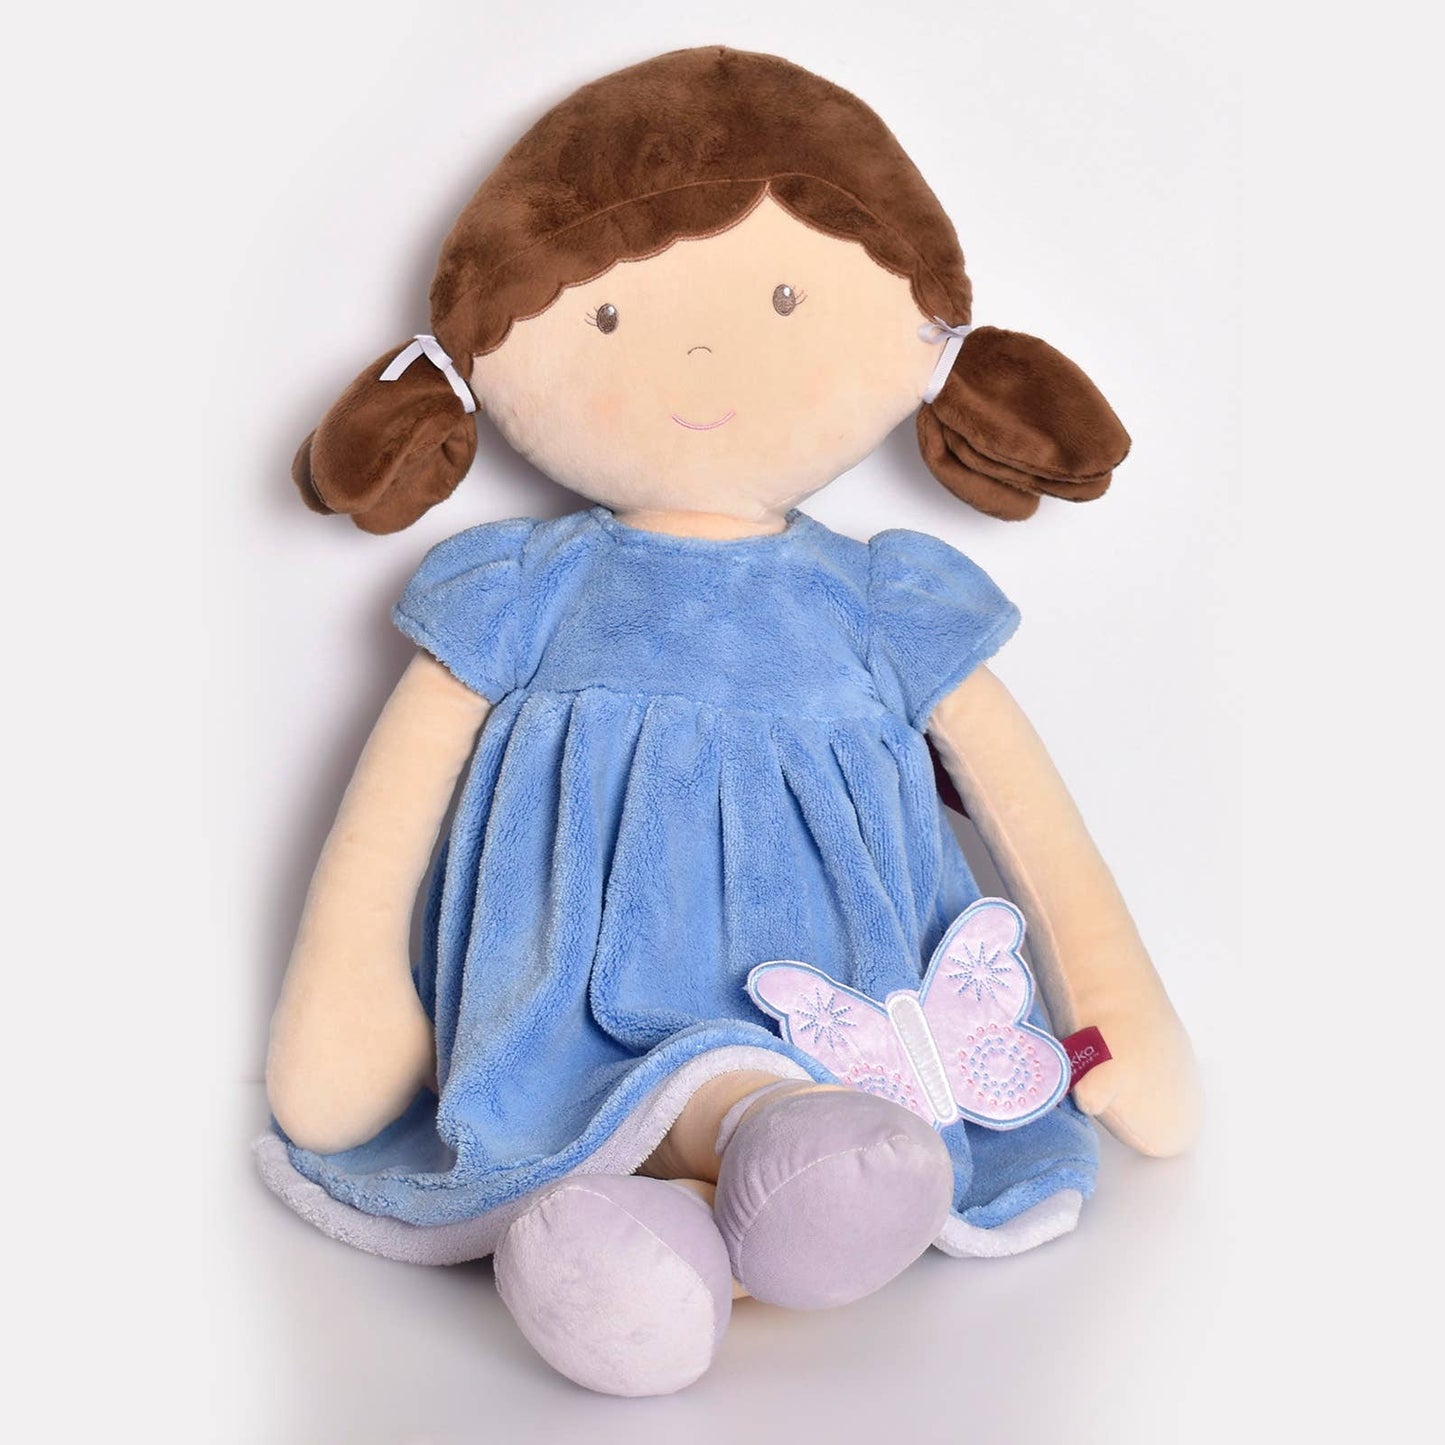 Pari Display Doll with Brown Hair/Blue & Purple Dress - Einstein's Attic